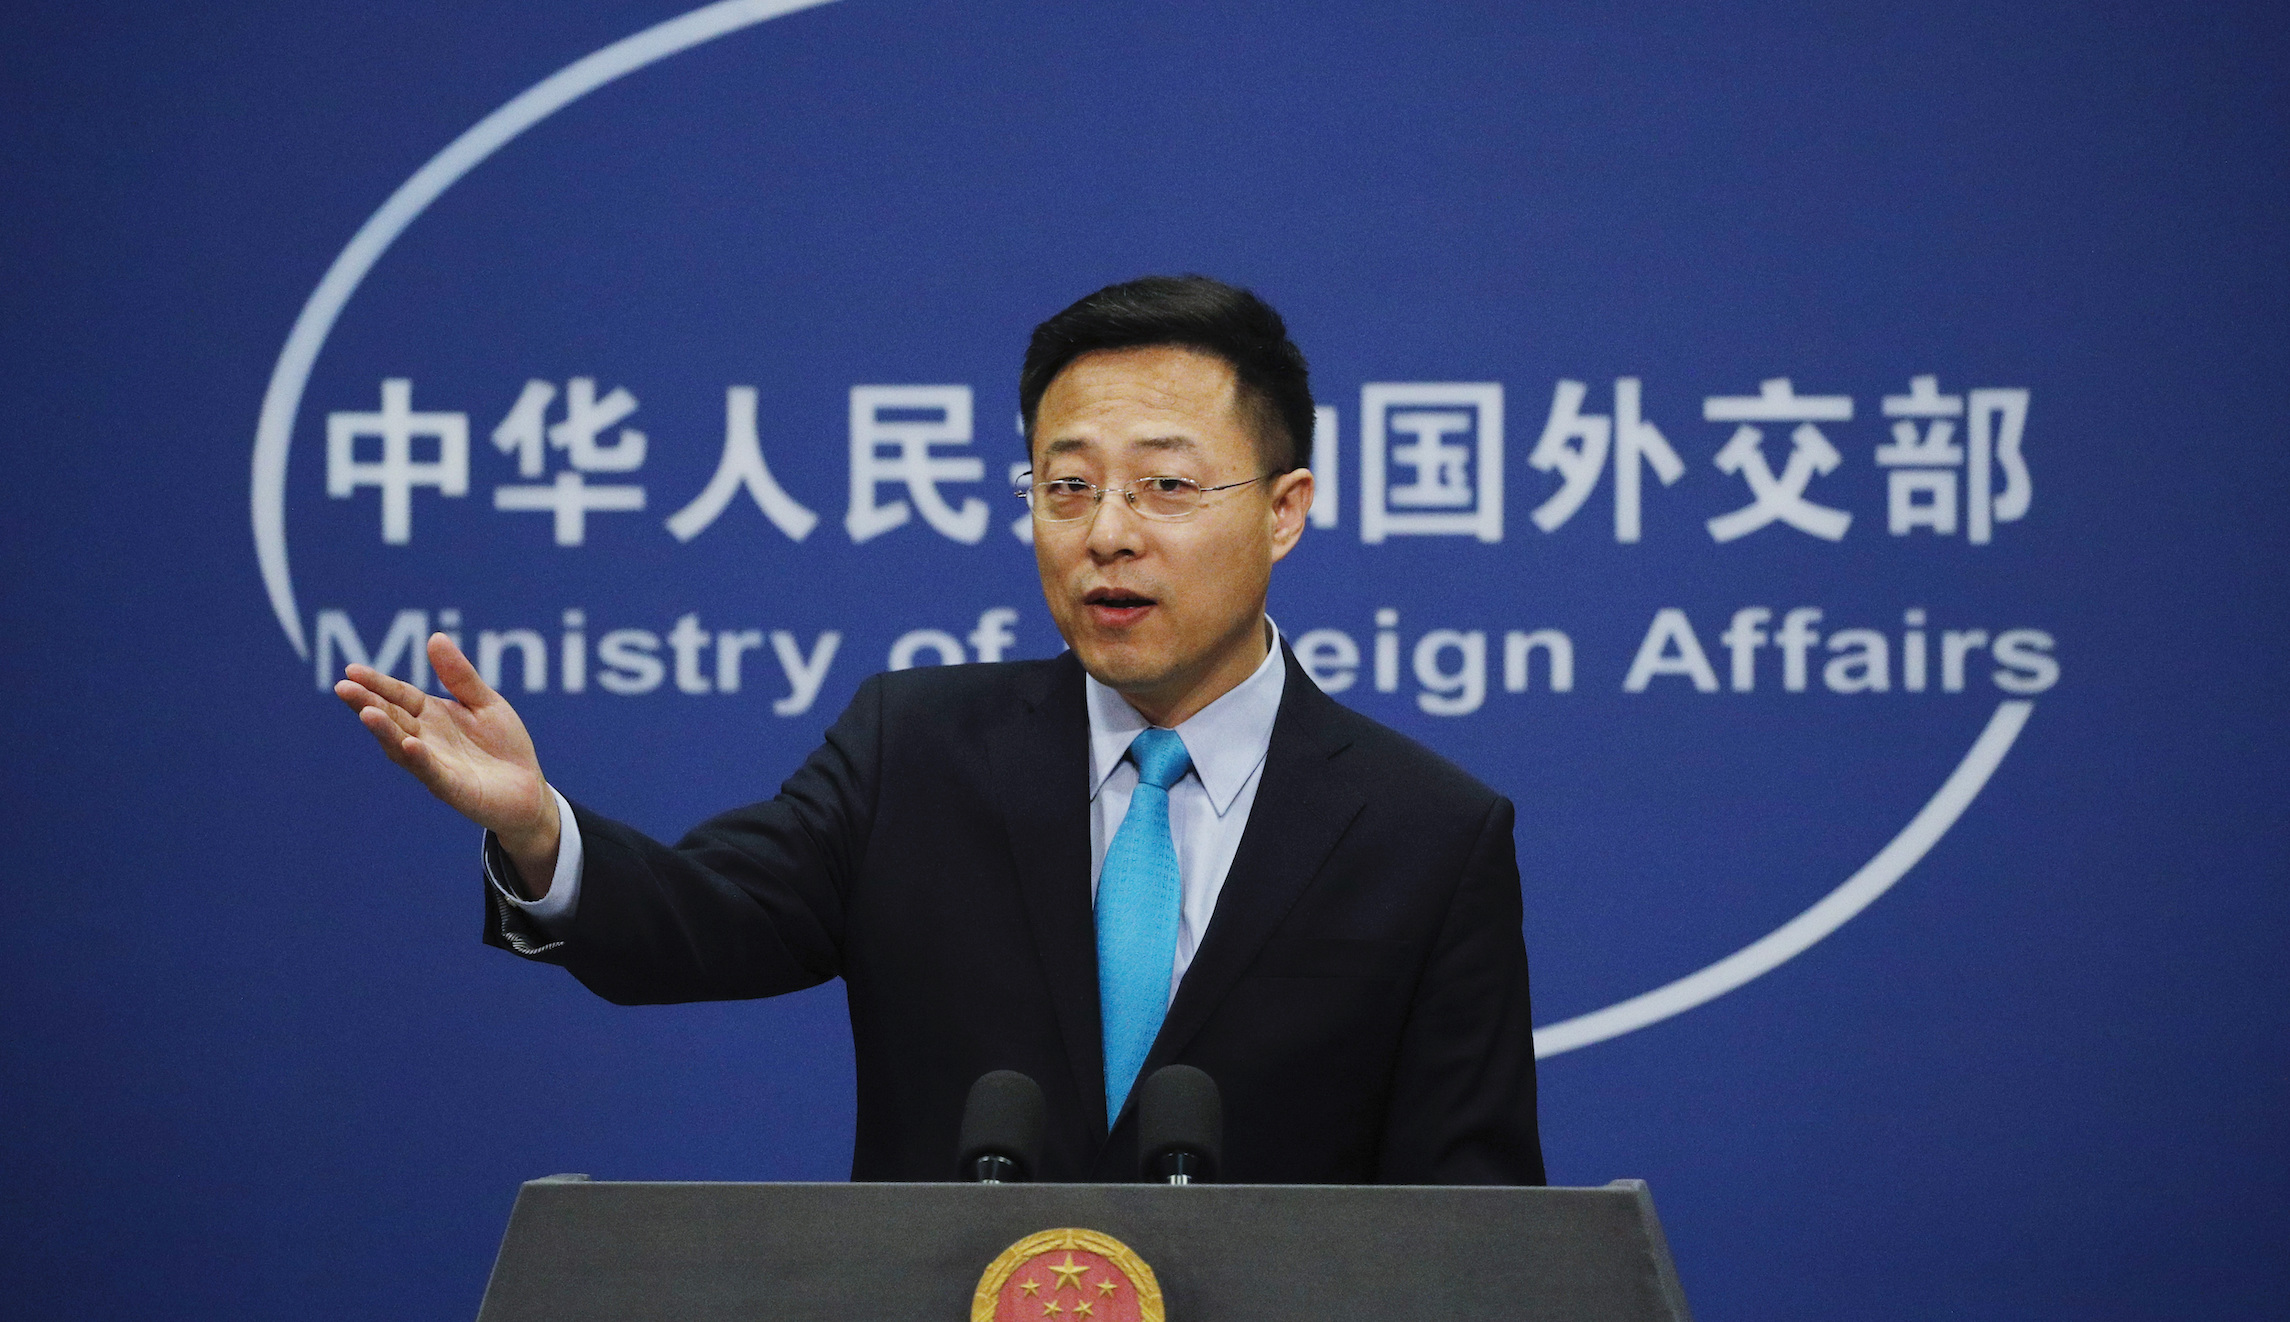 China threatens retaliation over US restrictions on Chinese media - Washington Examiner